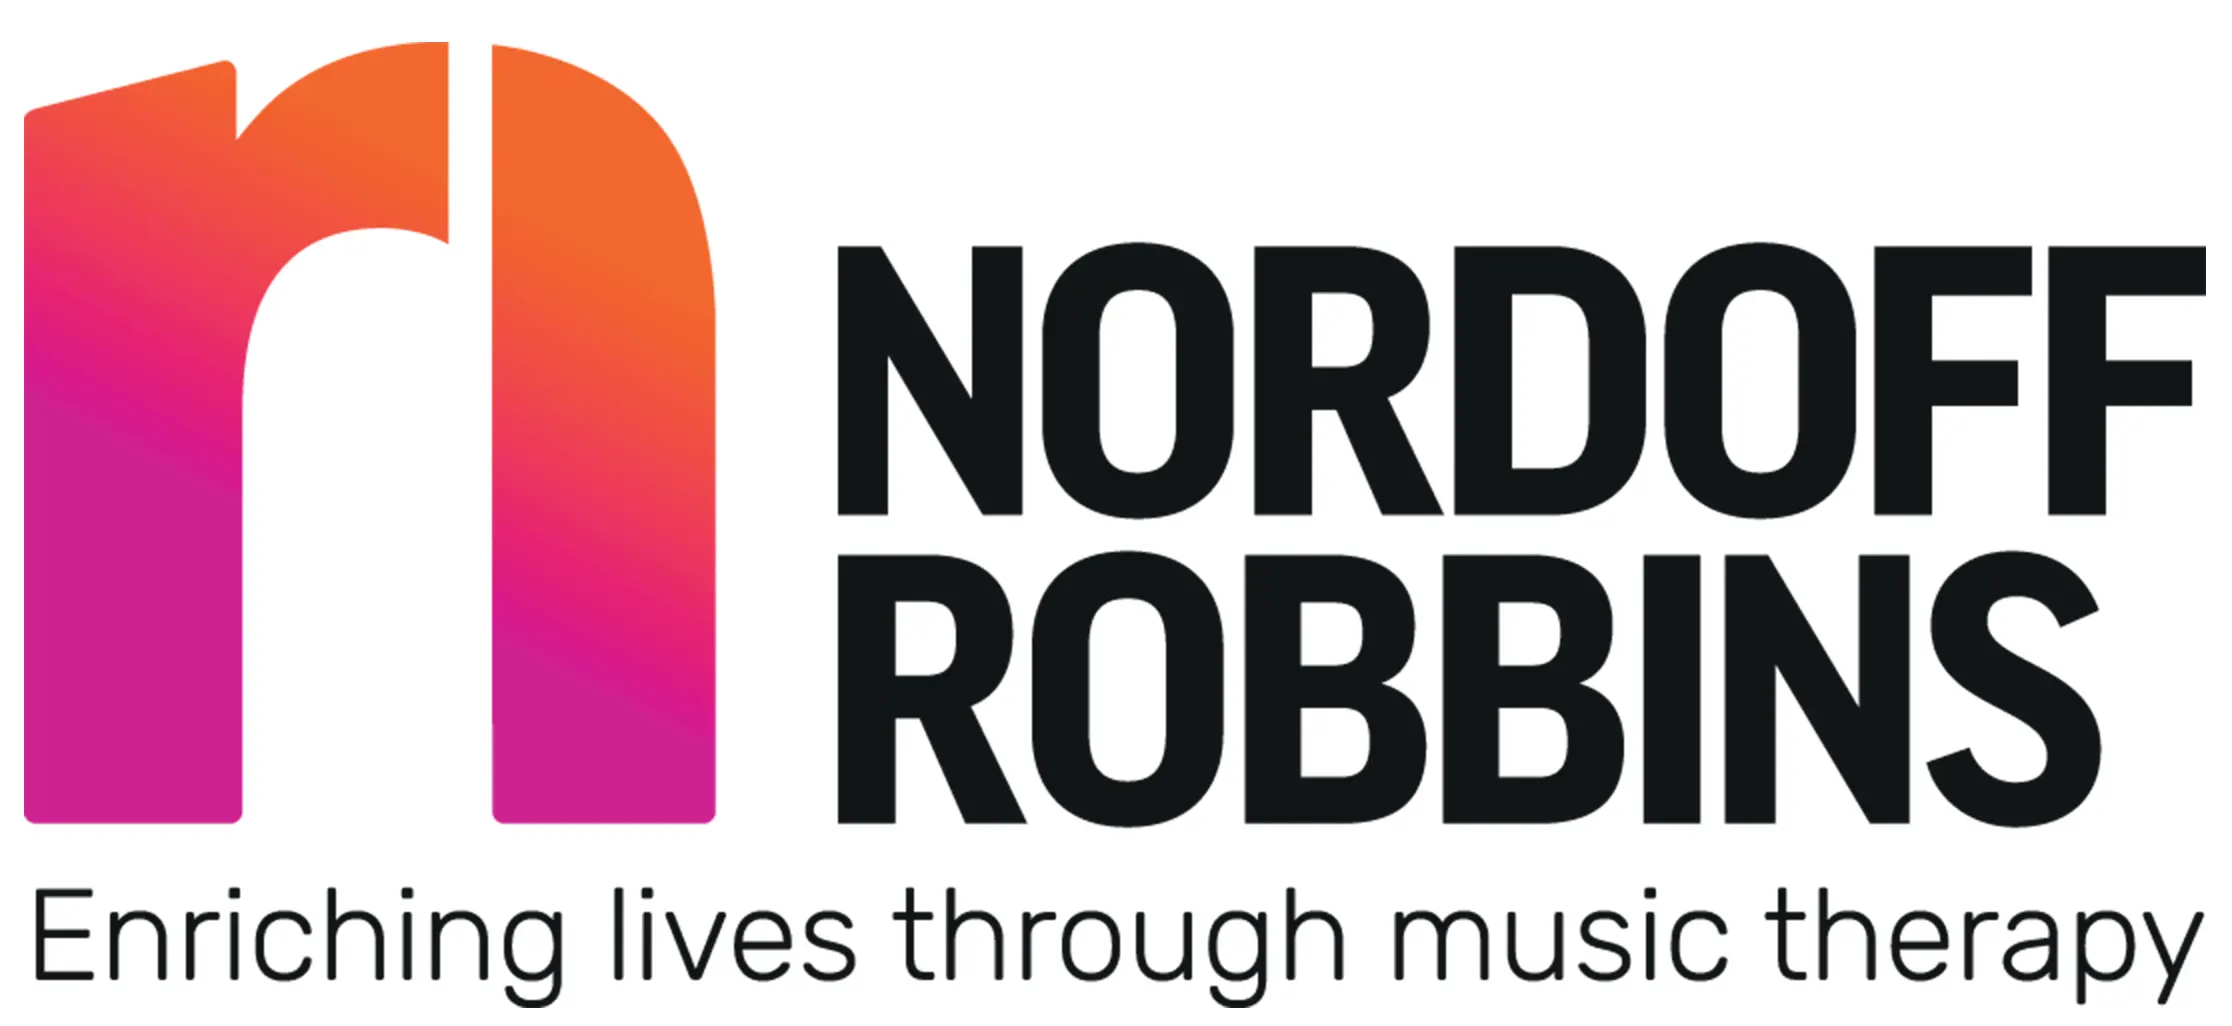 Nordoff Robbins